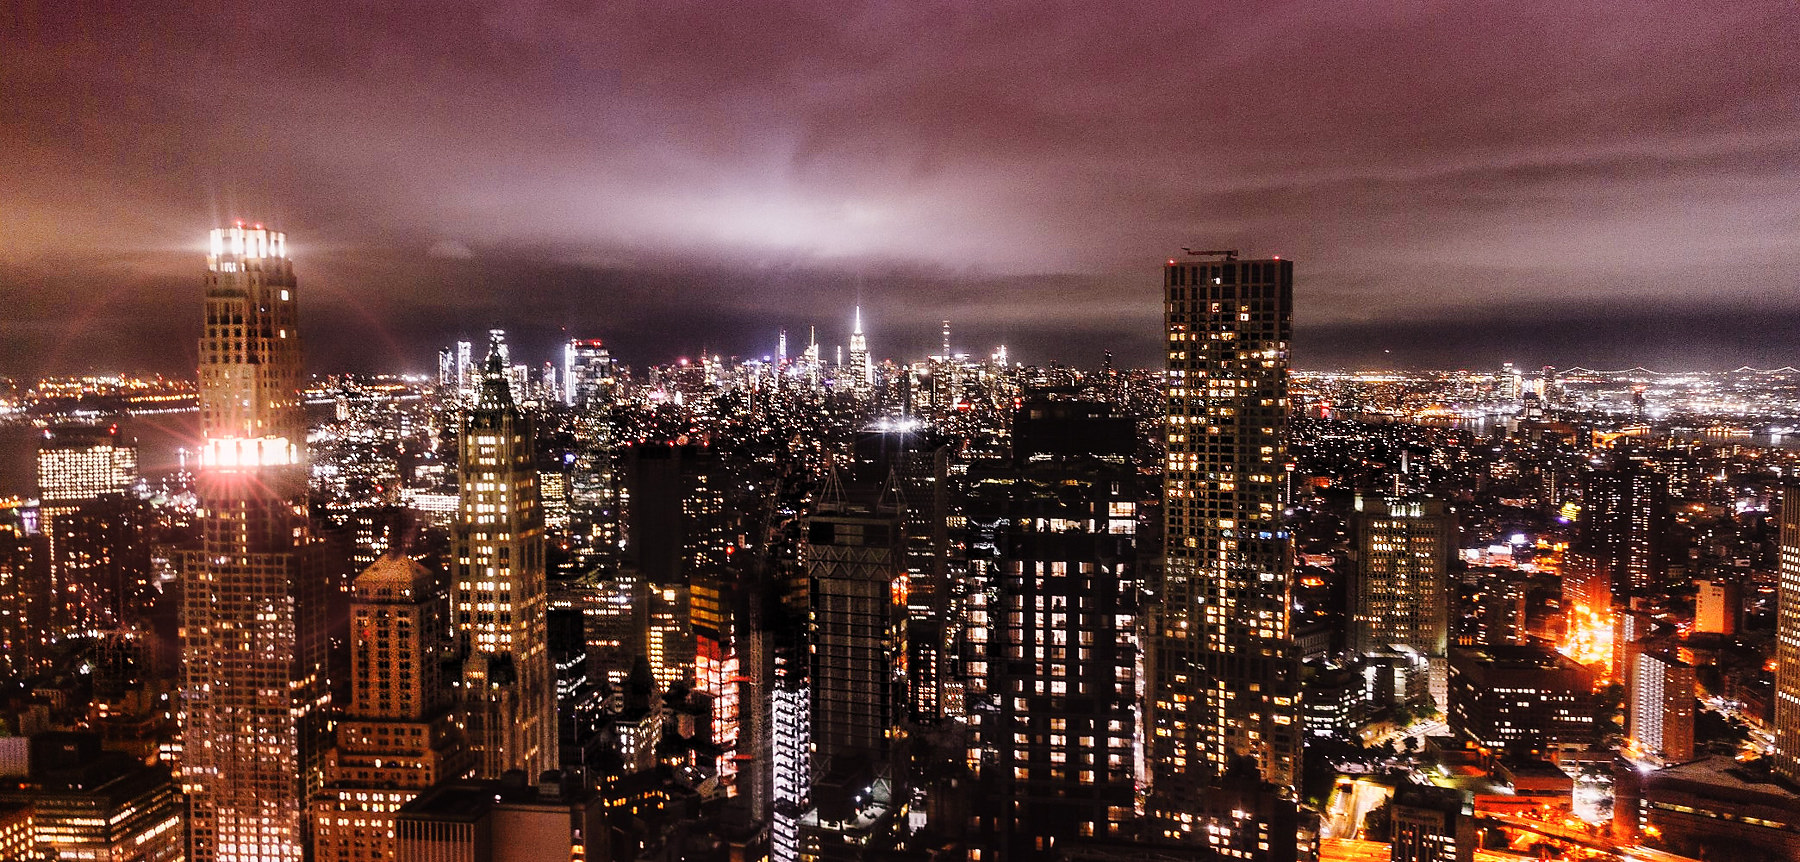 New York City Nights